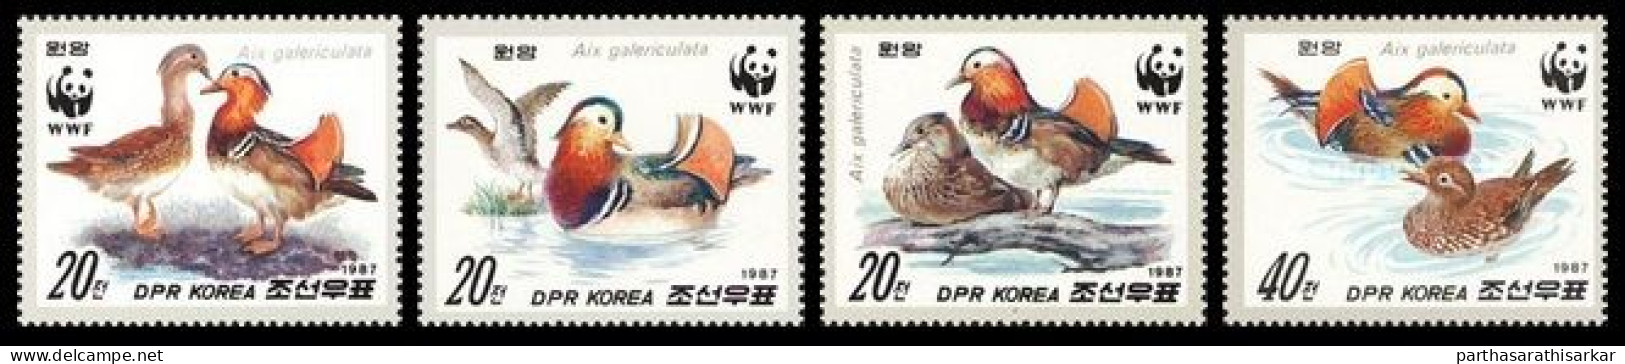 NORTH KOREA 1987 WWF WORLD NATURE CONSERVATION MANDARIN DUCKS COMPLETE SET MNH - Nuevos